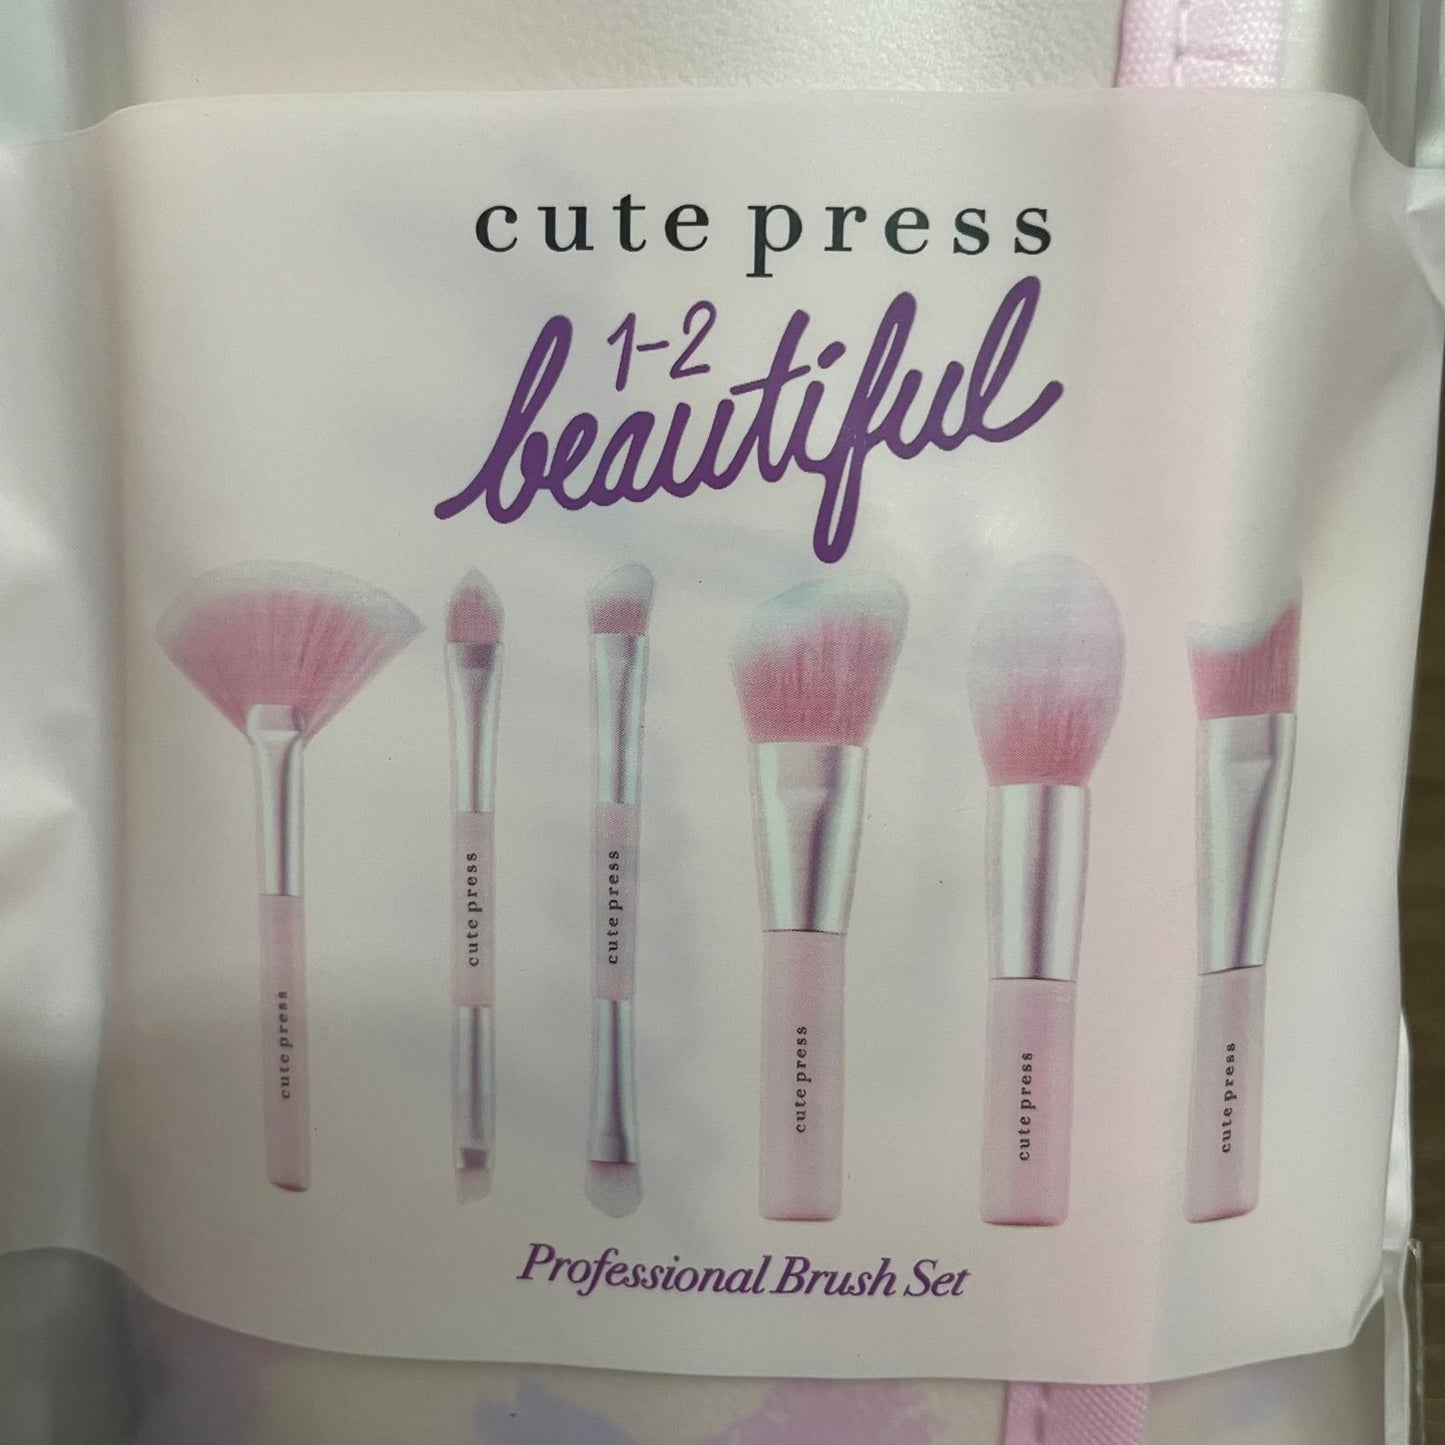 Cute Press Professional Brush Set